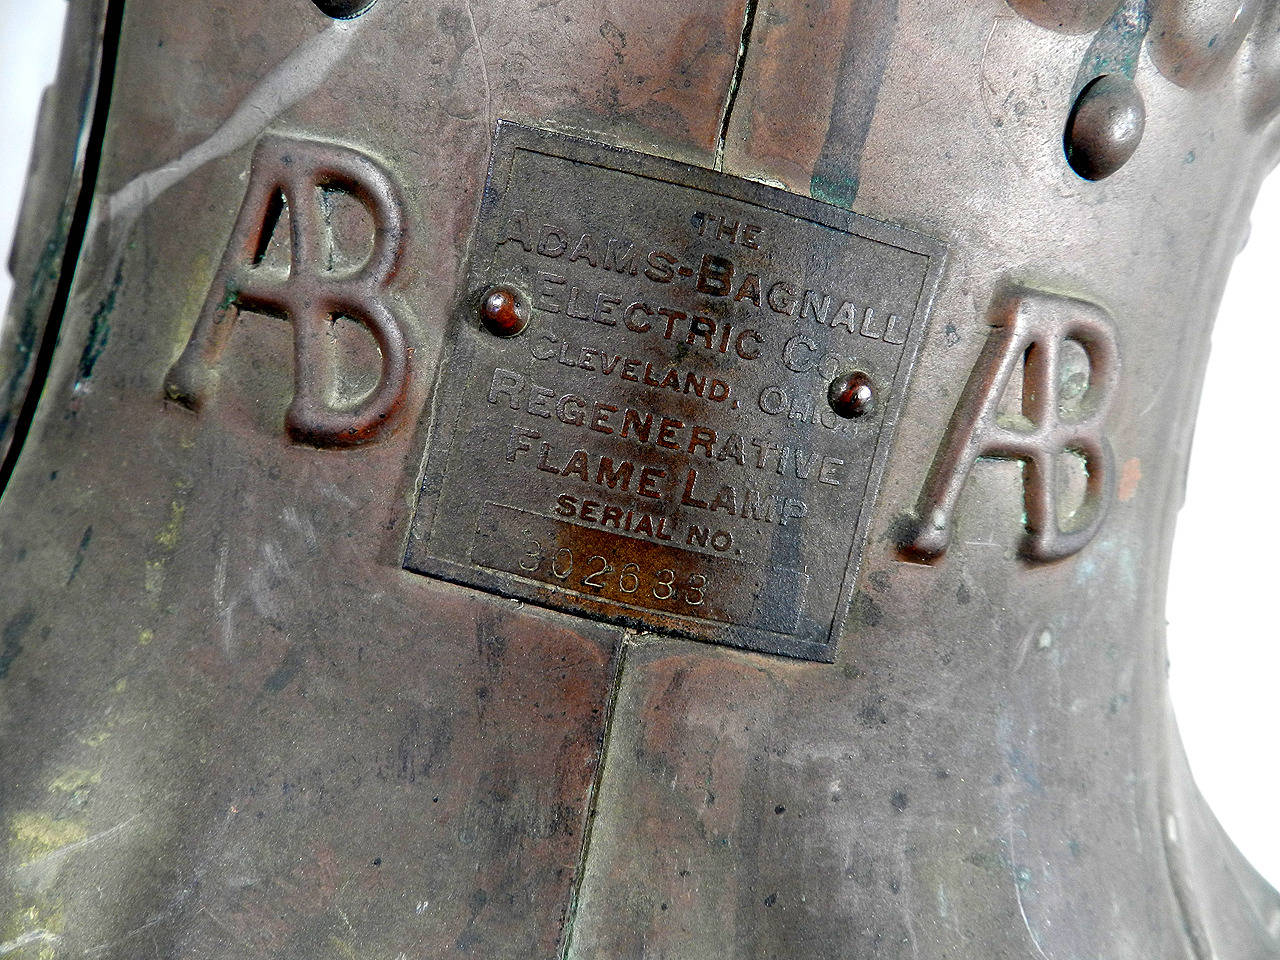 Industrial Remarkably Rare 1800s Adams-Bagnall Street Lamp